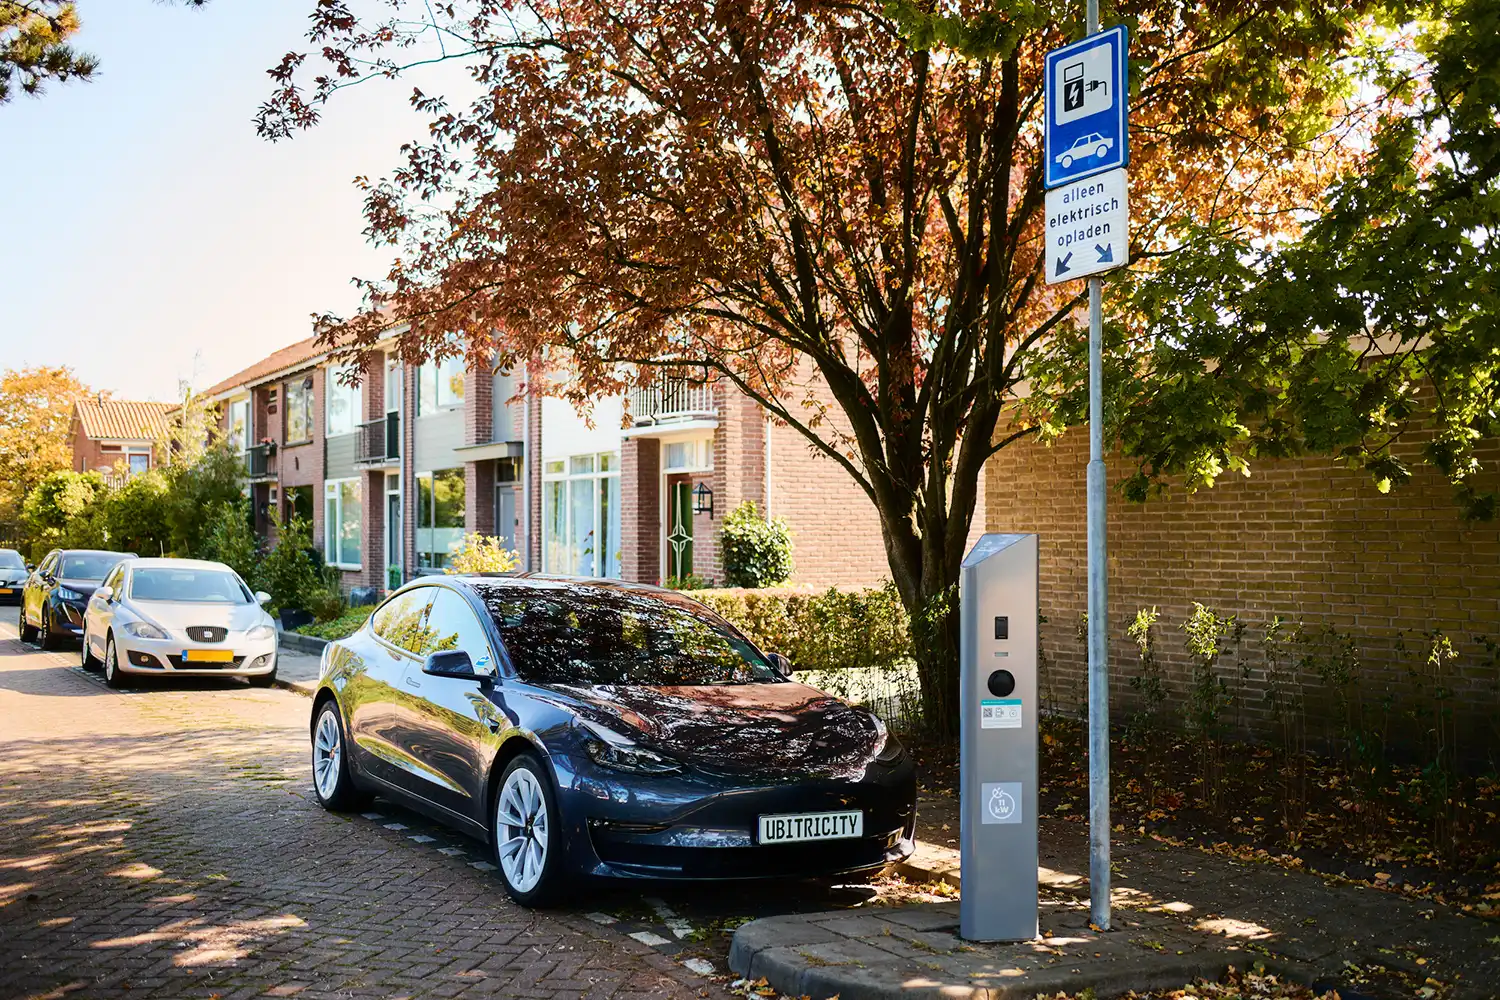 ubitricity celebrates its 10,000th EV charging point as it enters the Dutch EV charging market